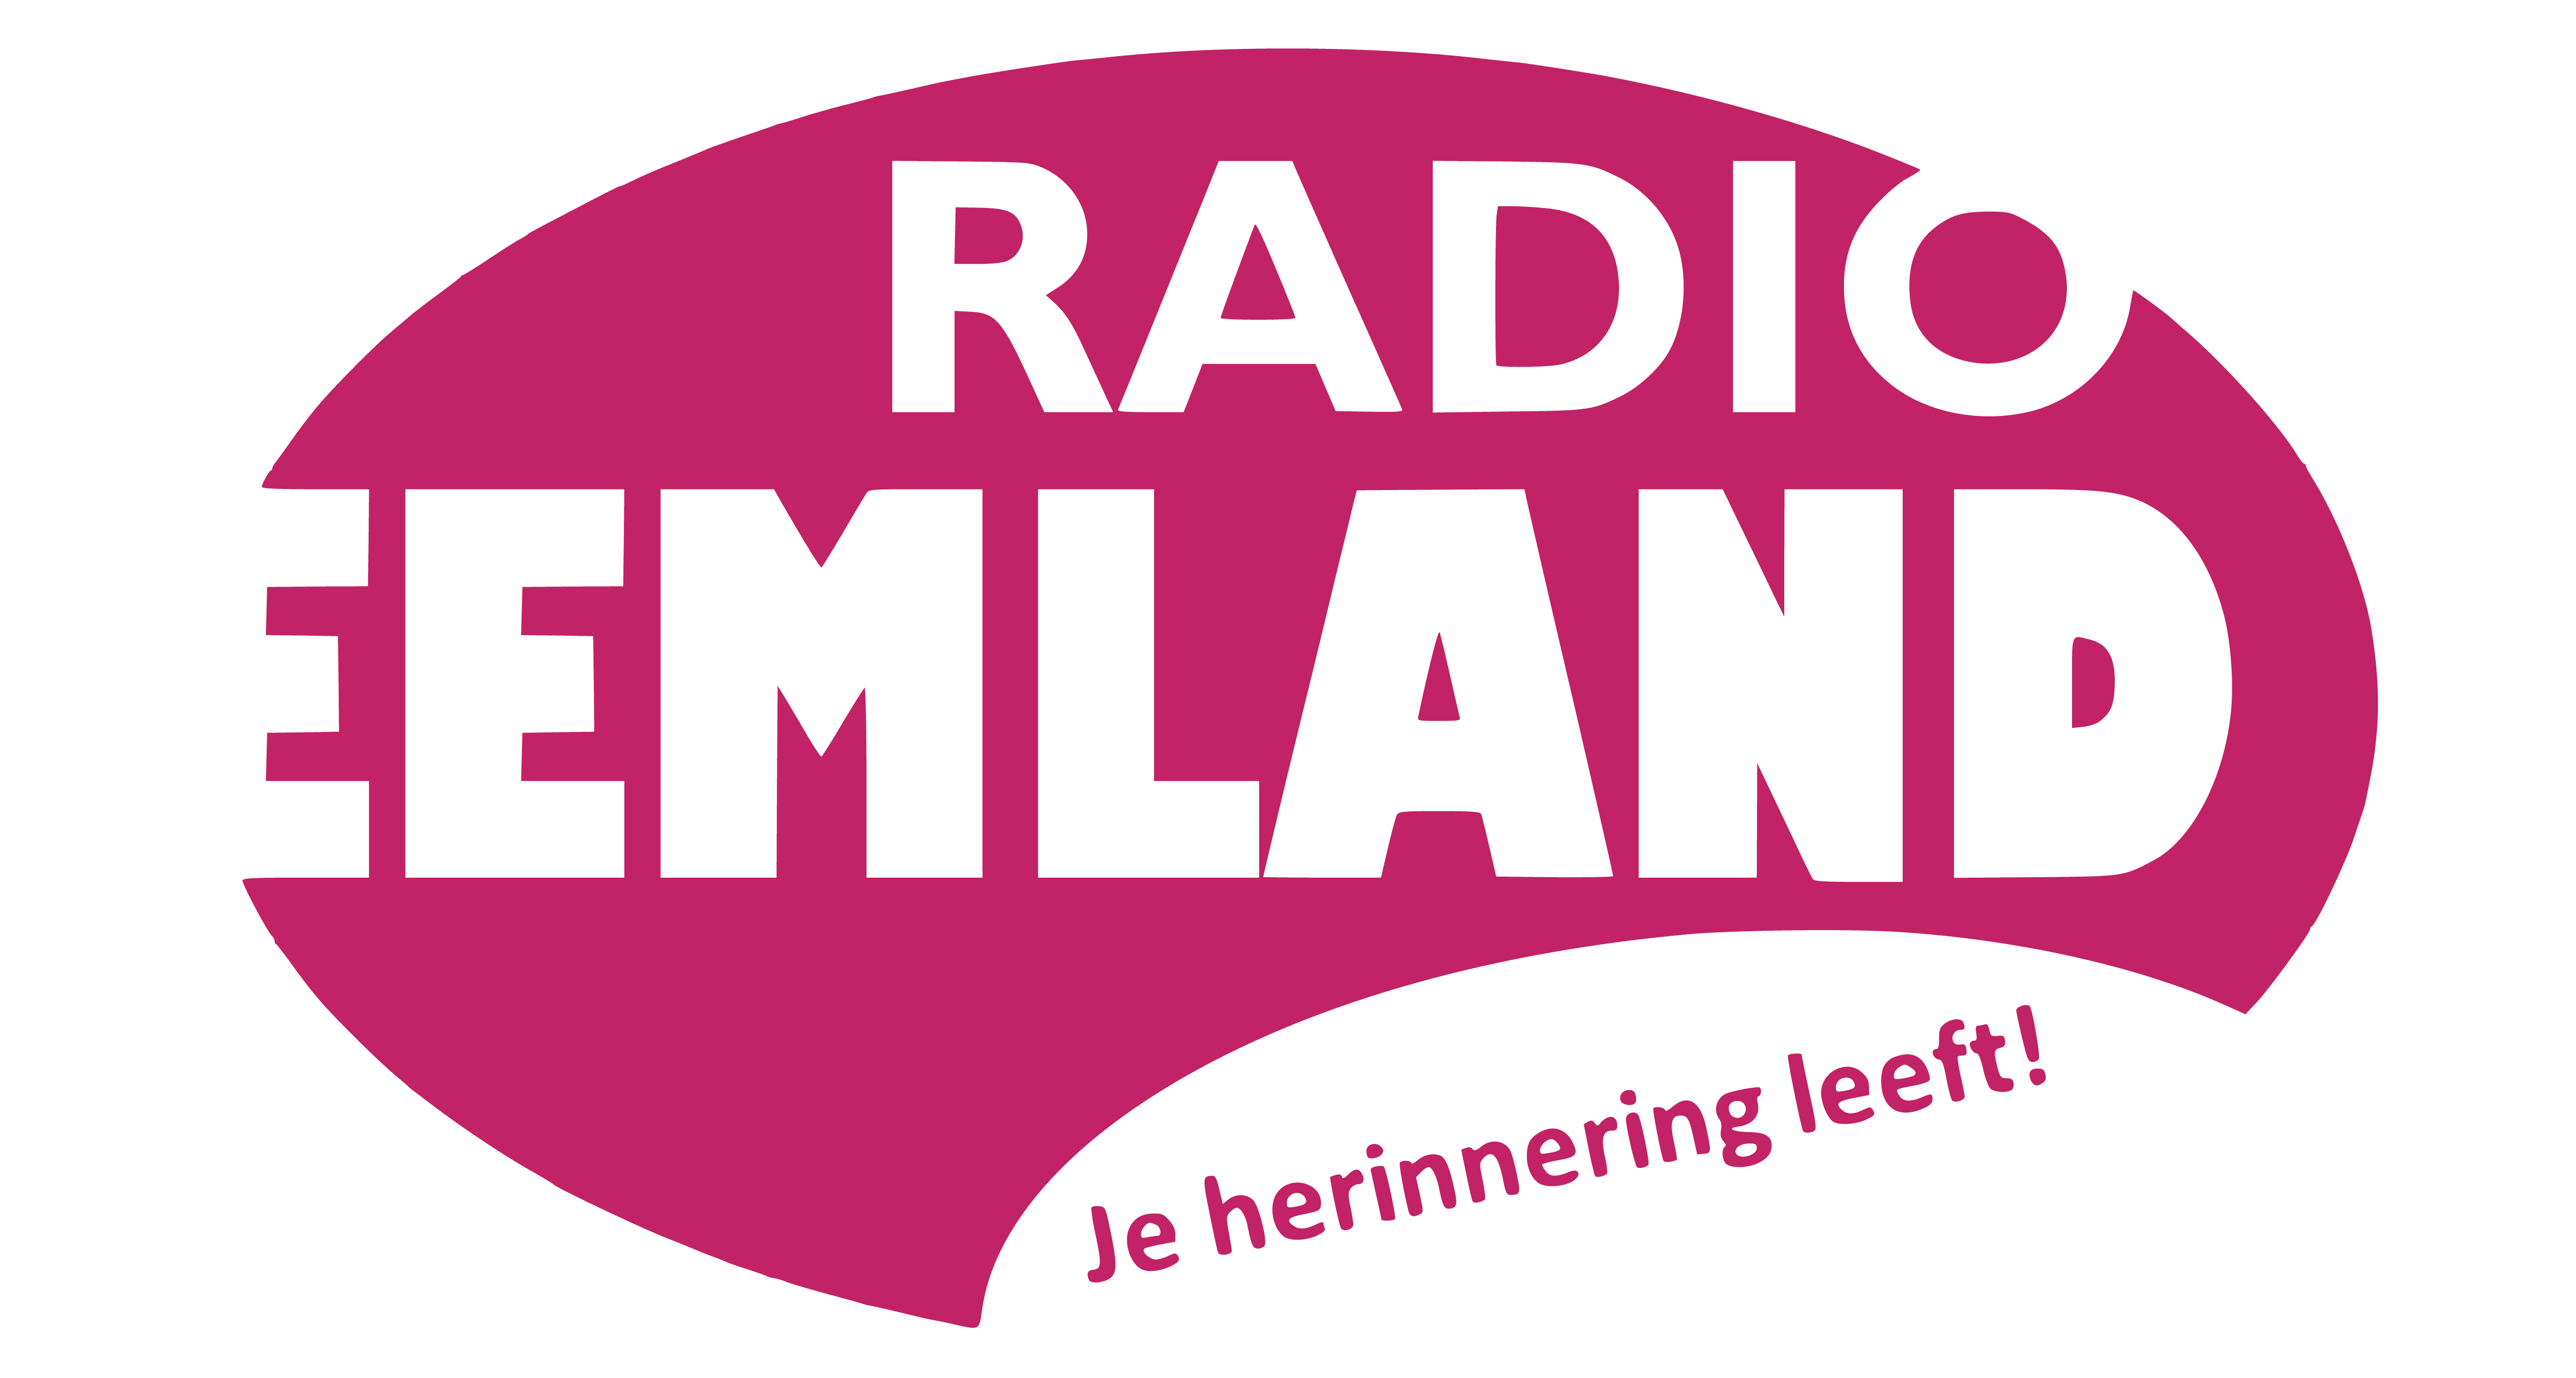 Logo for Live Studio Eemland